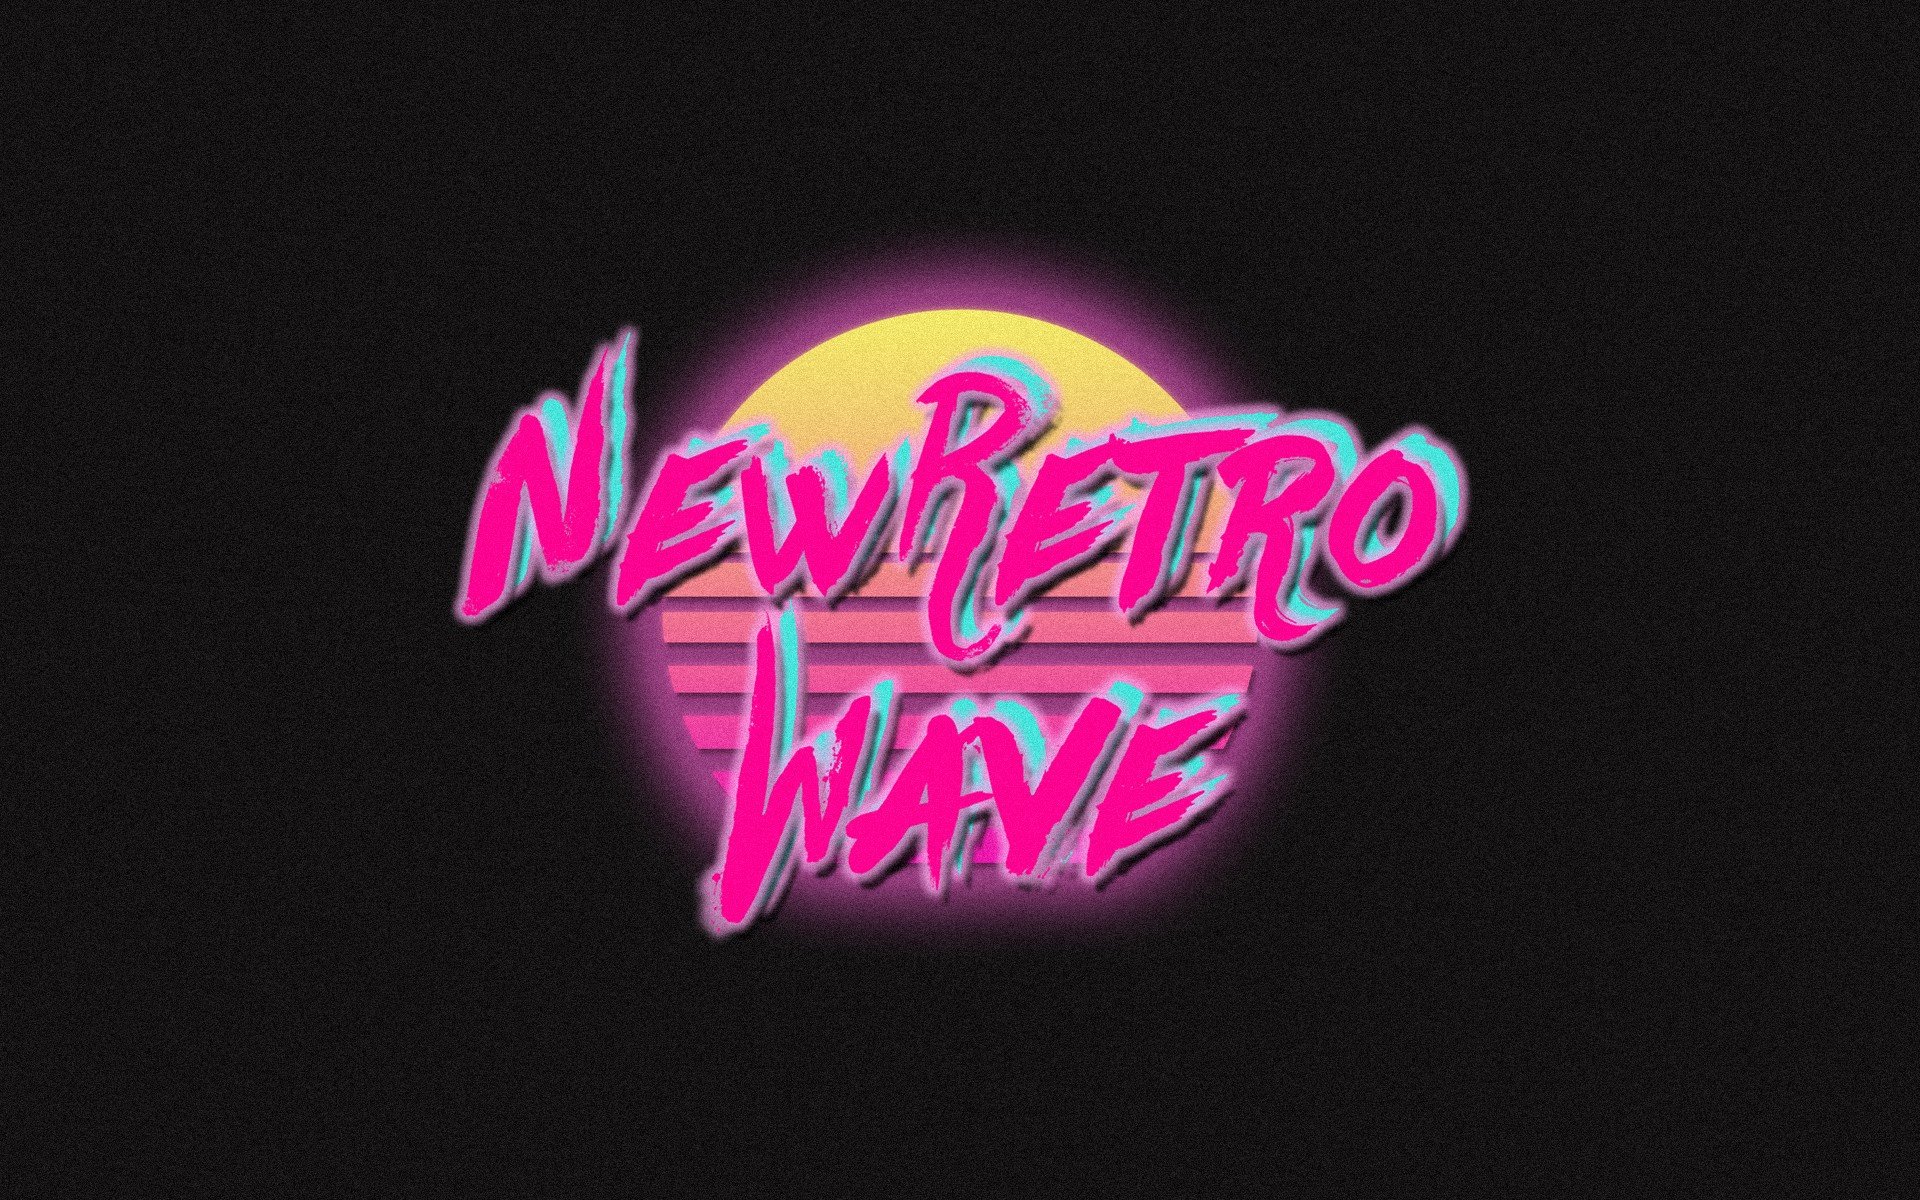 New Retro Wave, Neon, 1980s, Vintage, Retro games, Synthwave Wallpaper